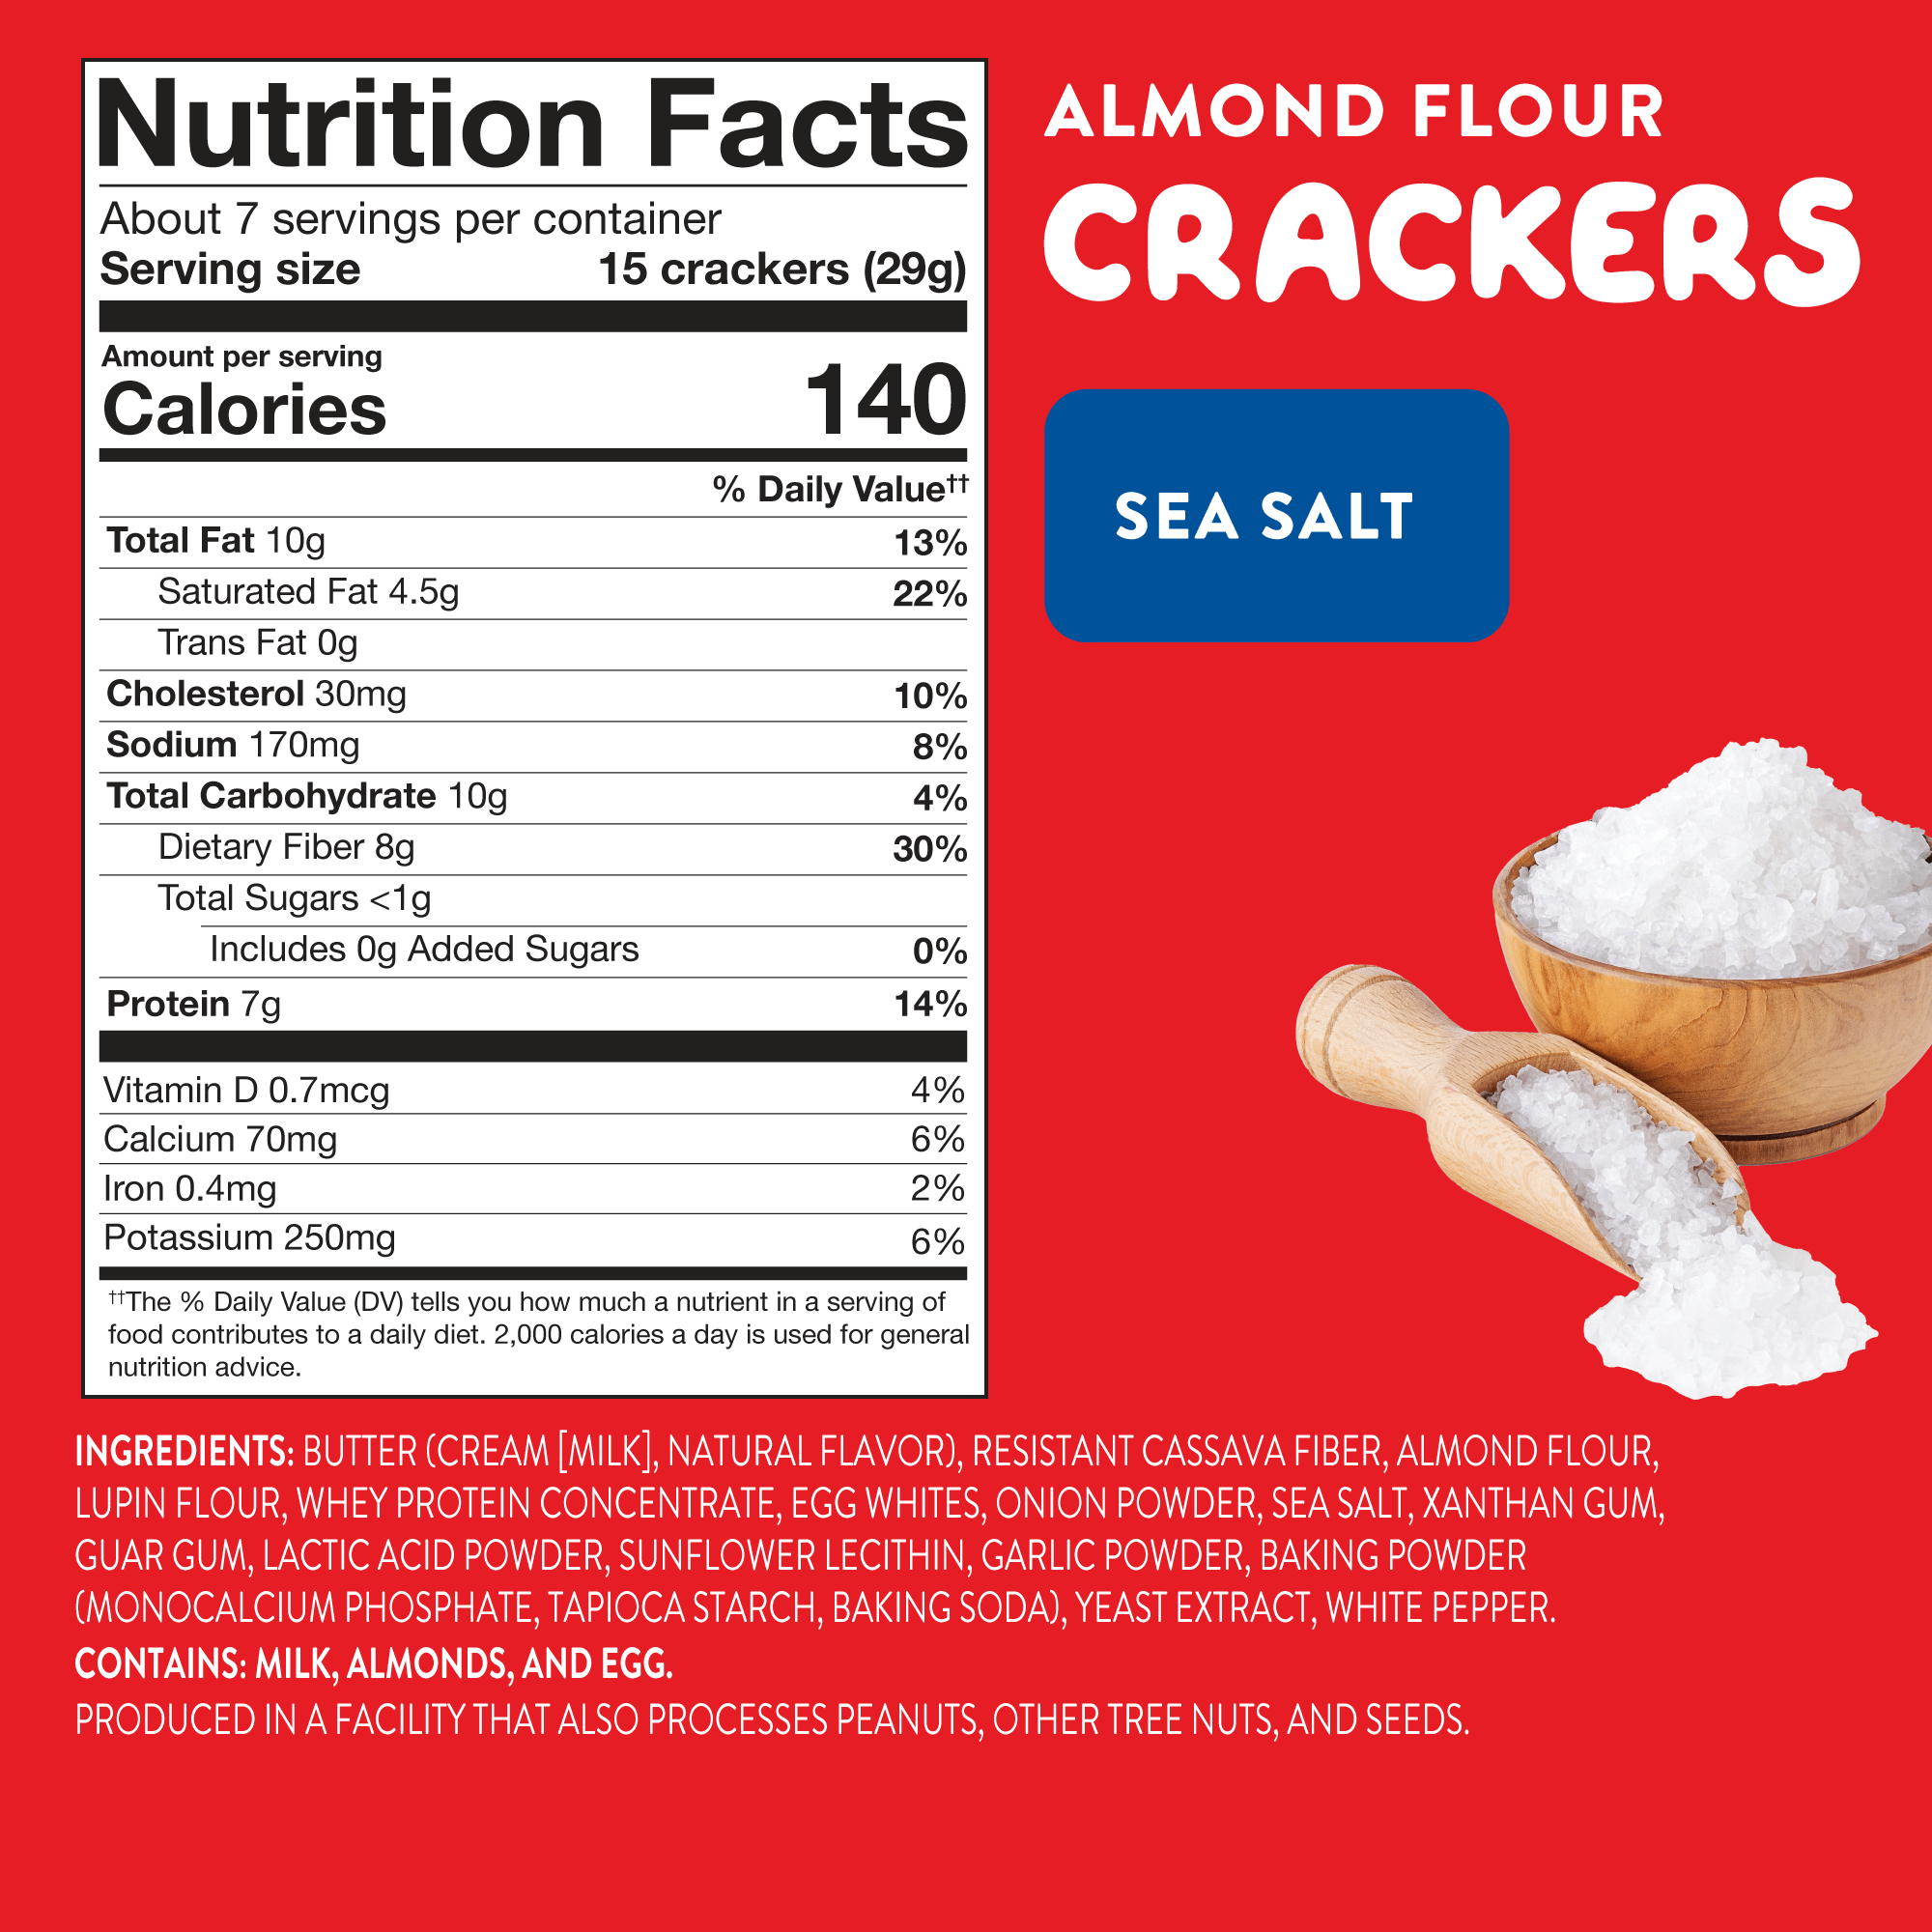 Almond Flour Crackers: Sea Salt